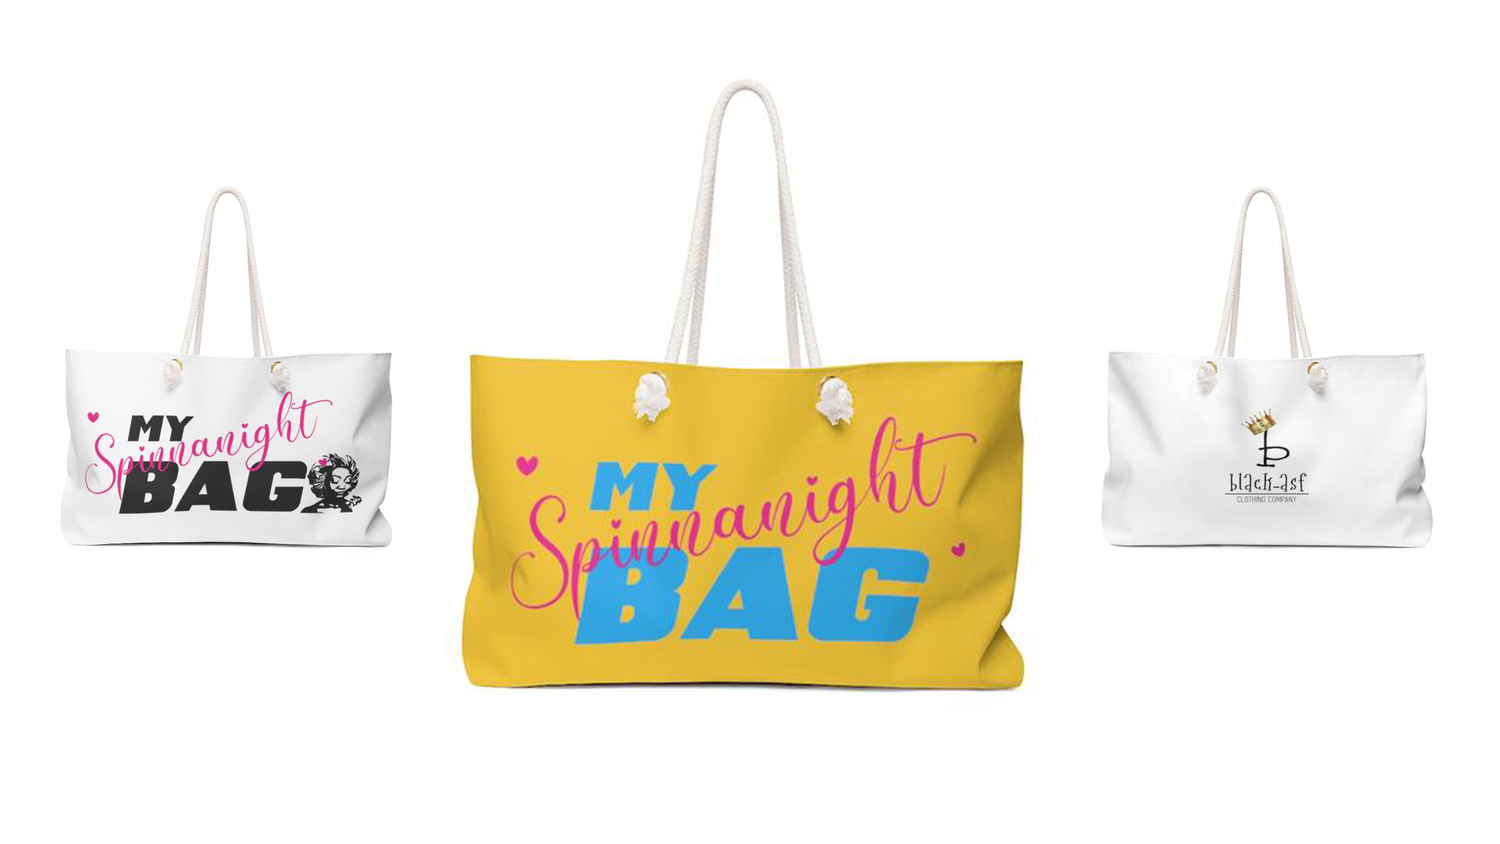 My Spinnanight Bag - Overnight Tote Bag